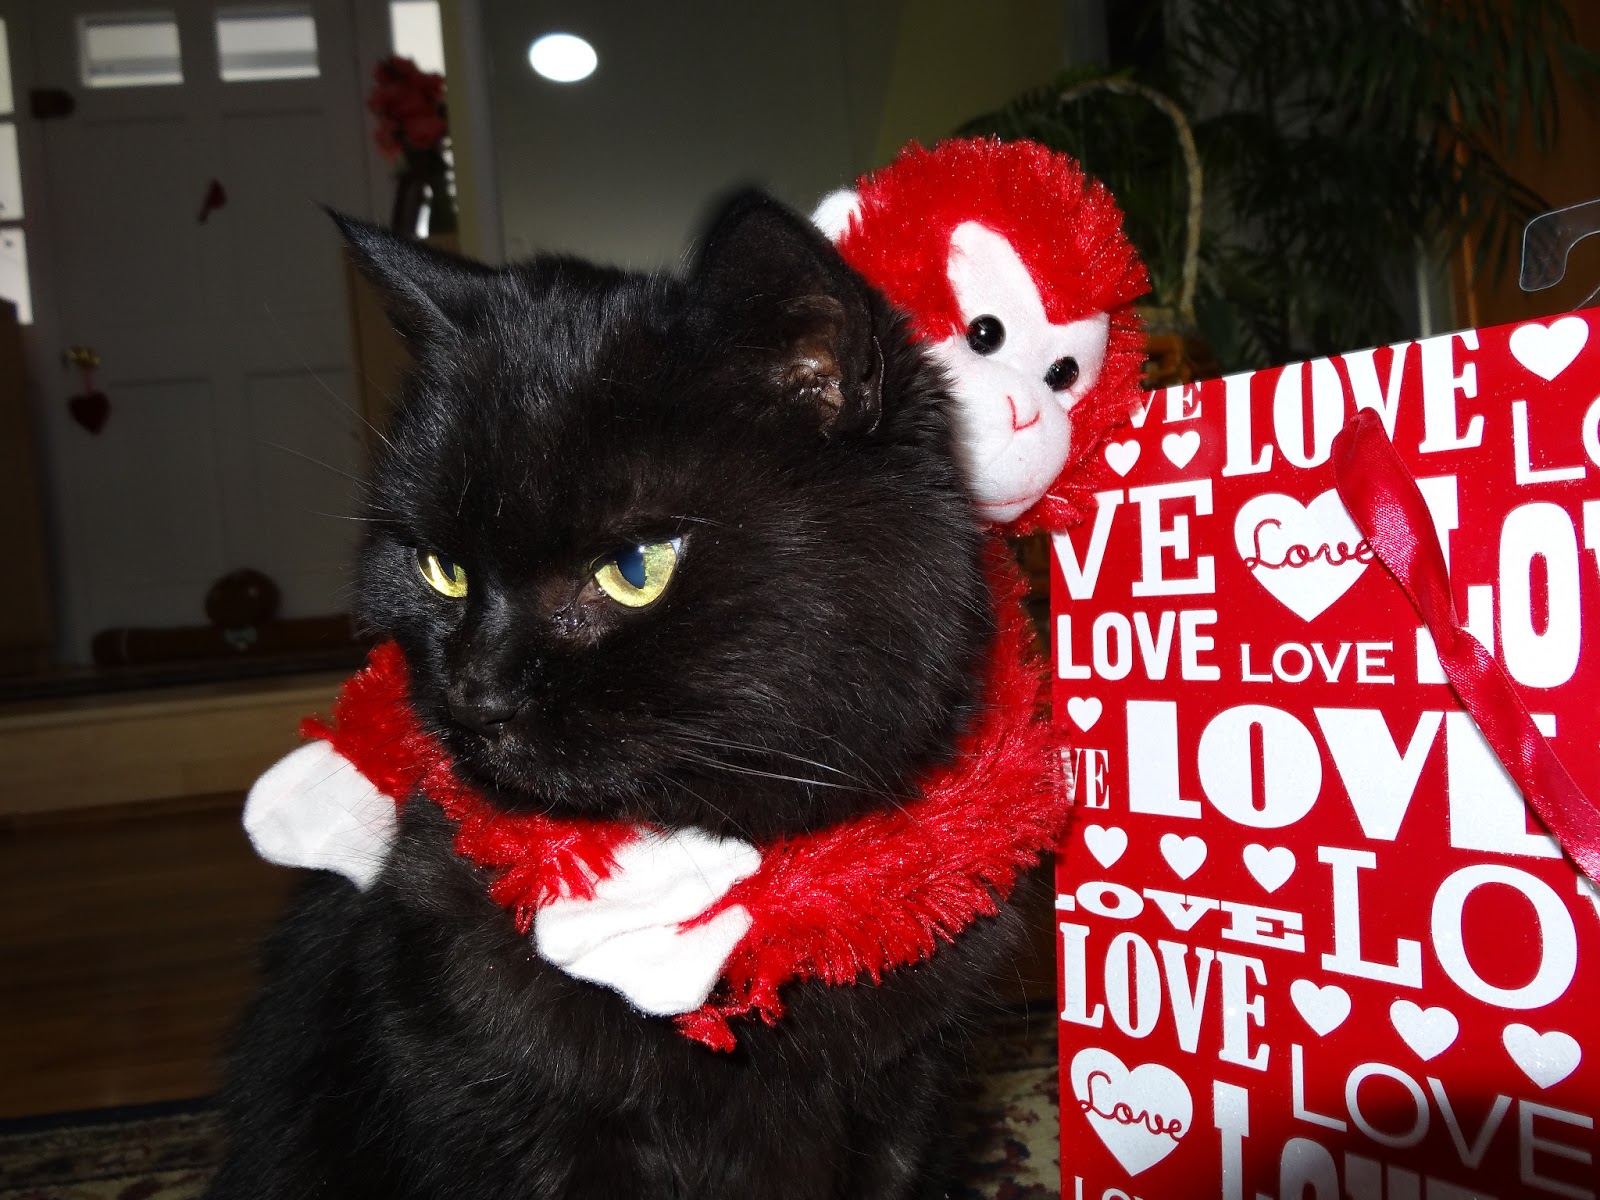 love-joy-and-peas-happy-valentine-s-day-funny-cat-photos